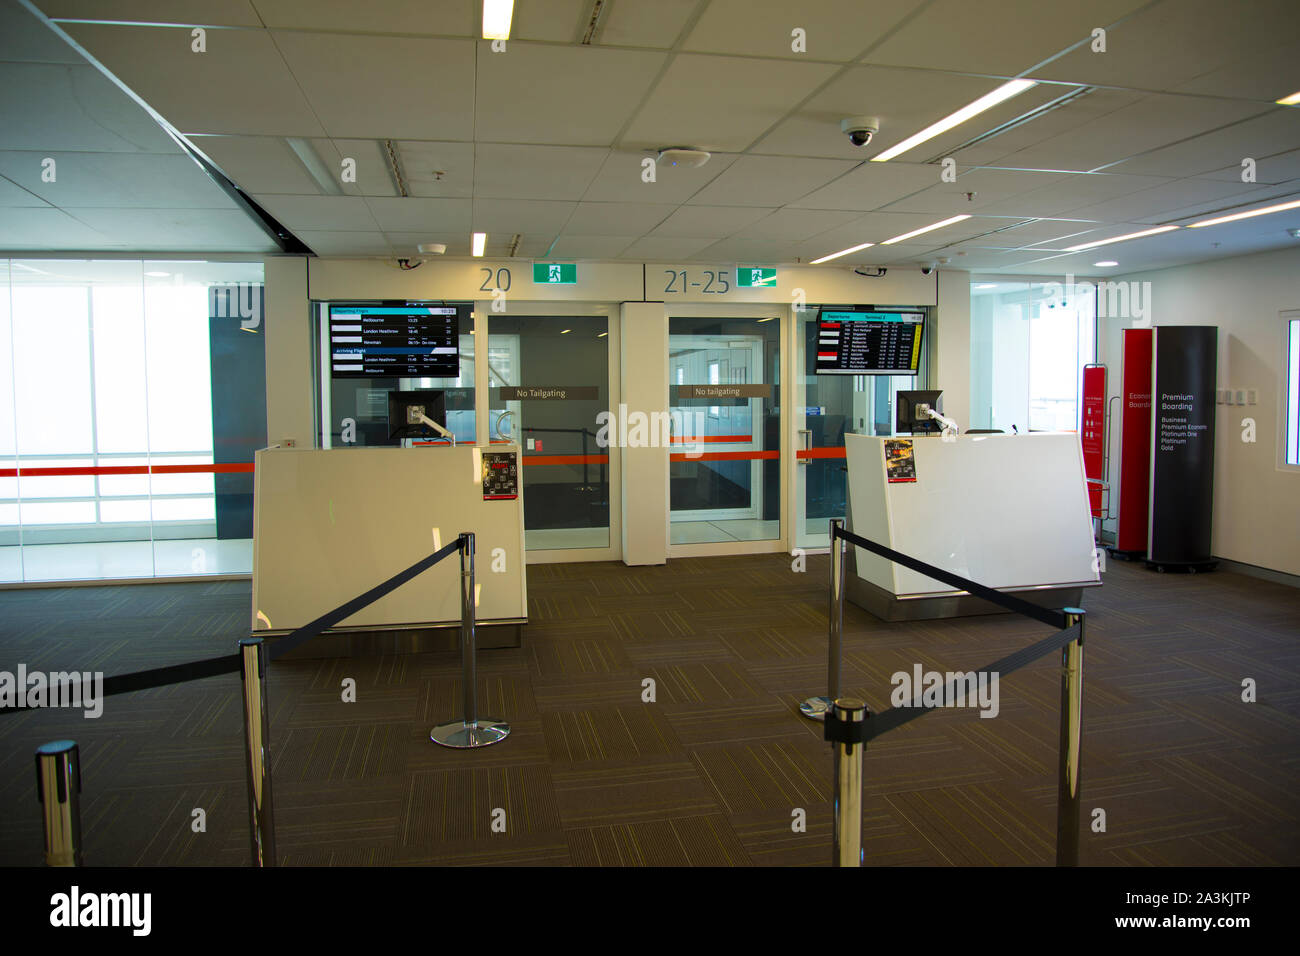 Lobby of Passenger Flight Terminal Stock Photo